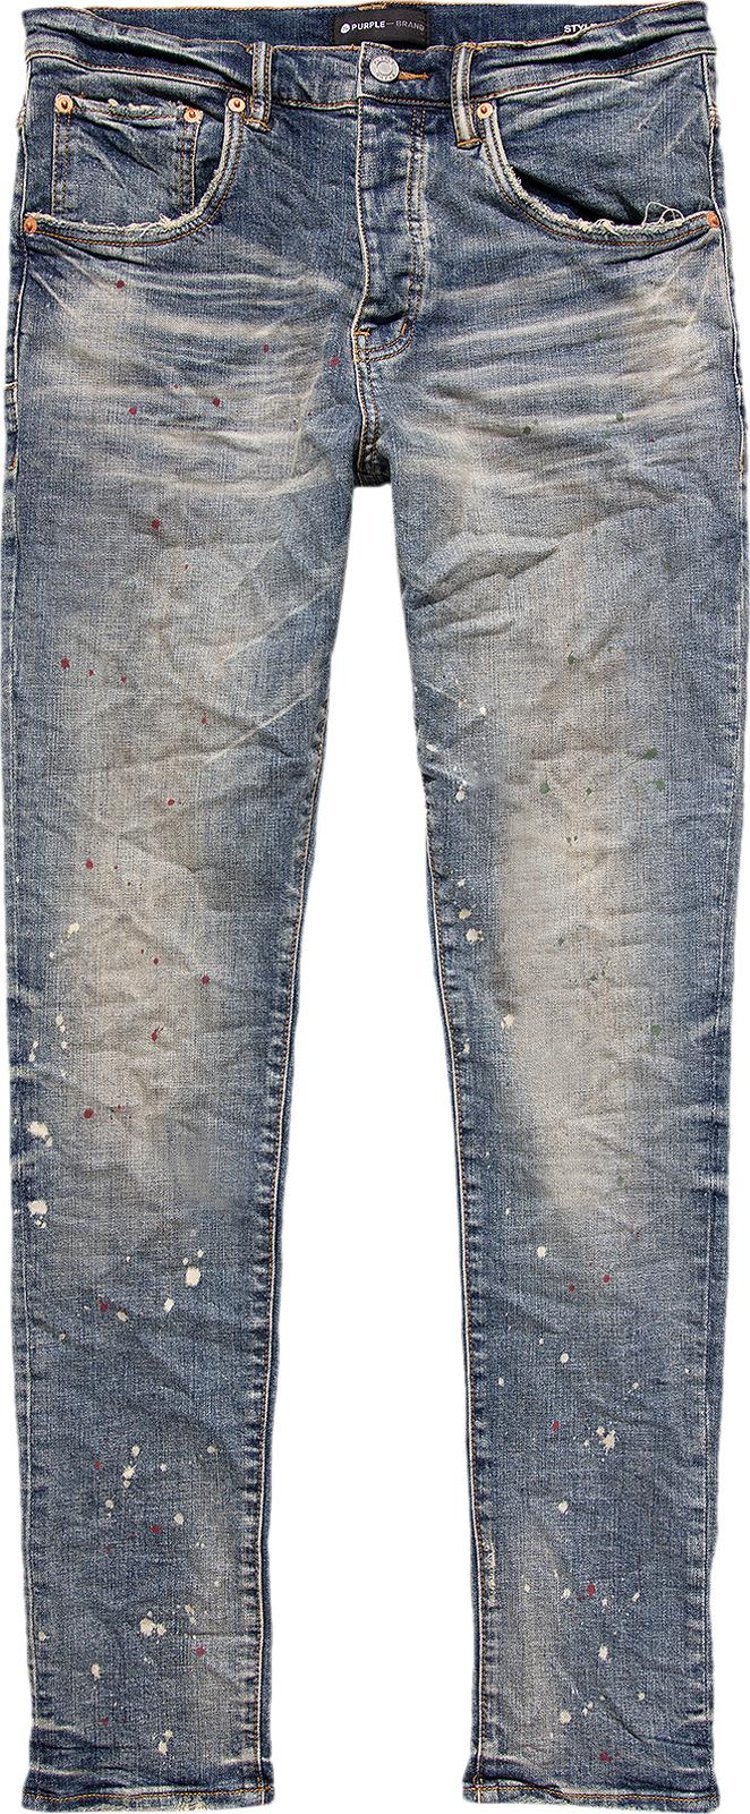 Buy PURPLE BRAND Vintage Spotted Jeans 'Indigo' - P002 VSI